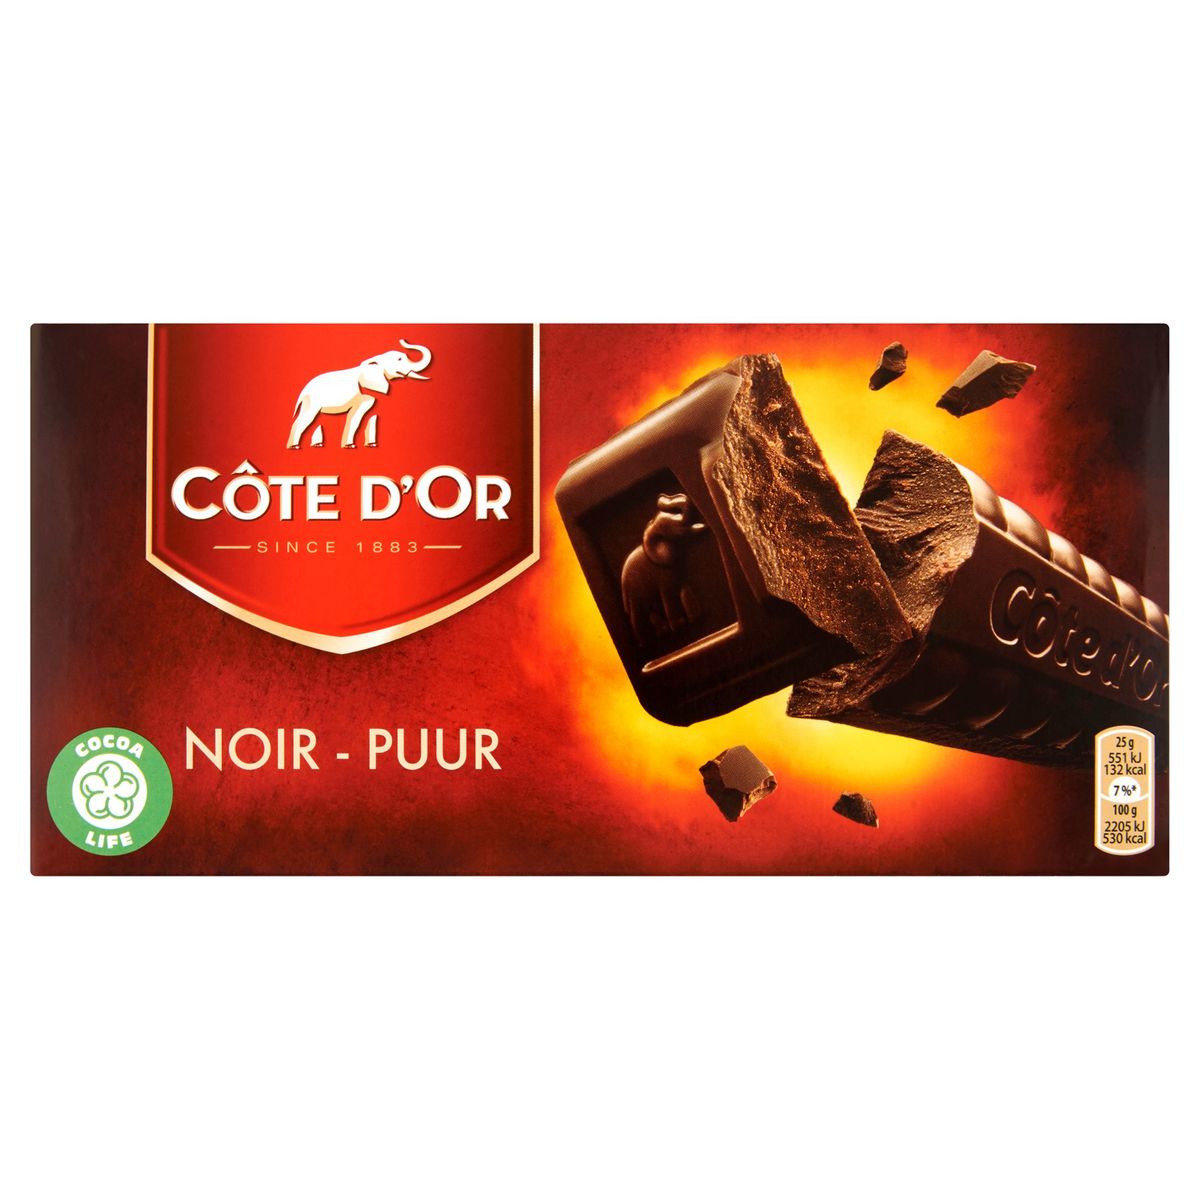 Côte d'Or L'Original Chocolade Tablet Pure Chocolade 400 g